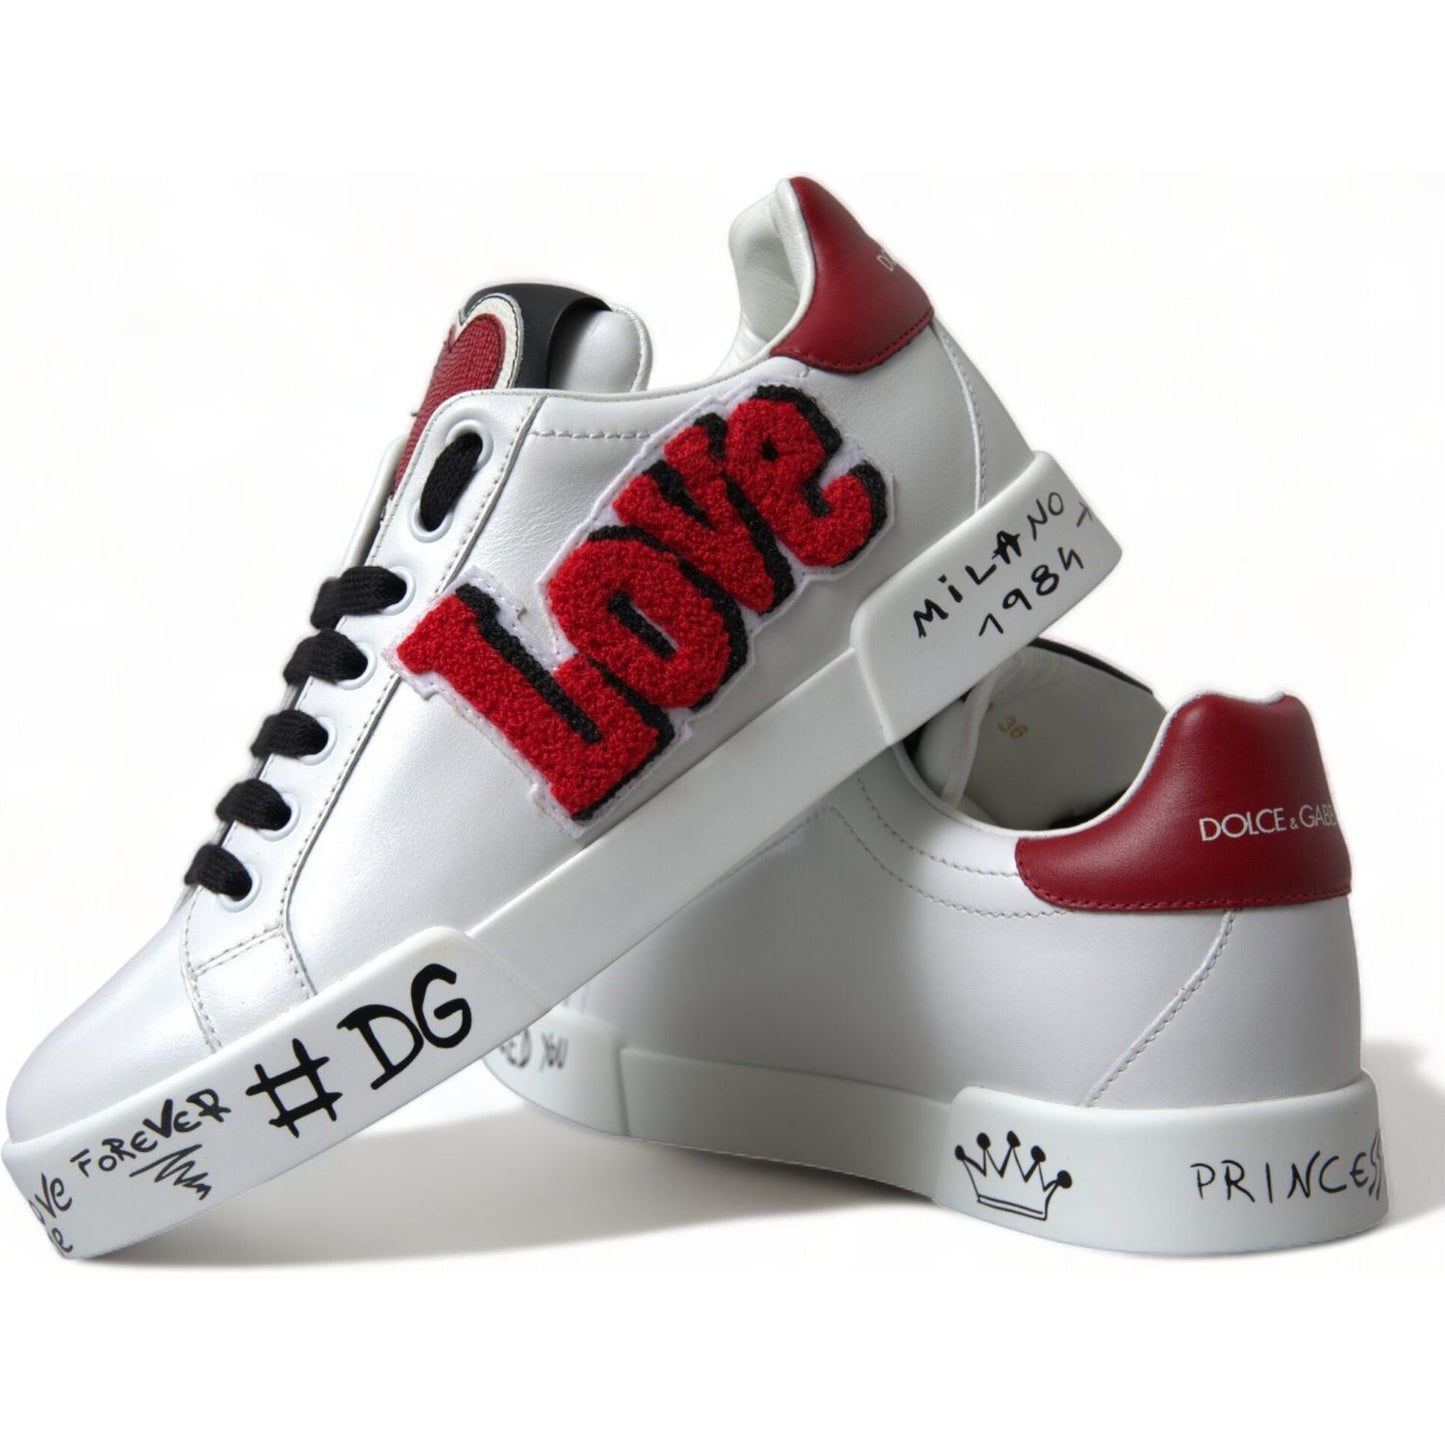 Dolce & Gabbana Chic White Portofino Leather Sneakers white-love-patch-portofino-classic-sneakers-shoes 465A3323-BG-scaled-249edecf-429.jpg